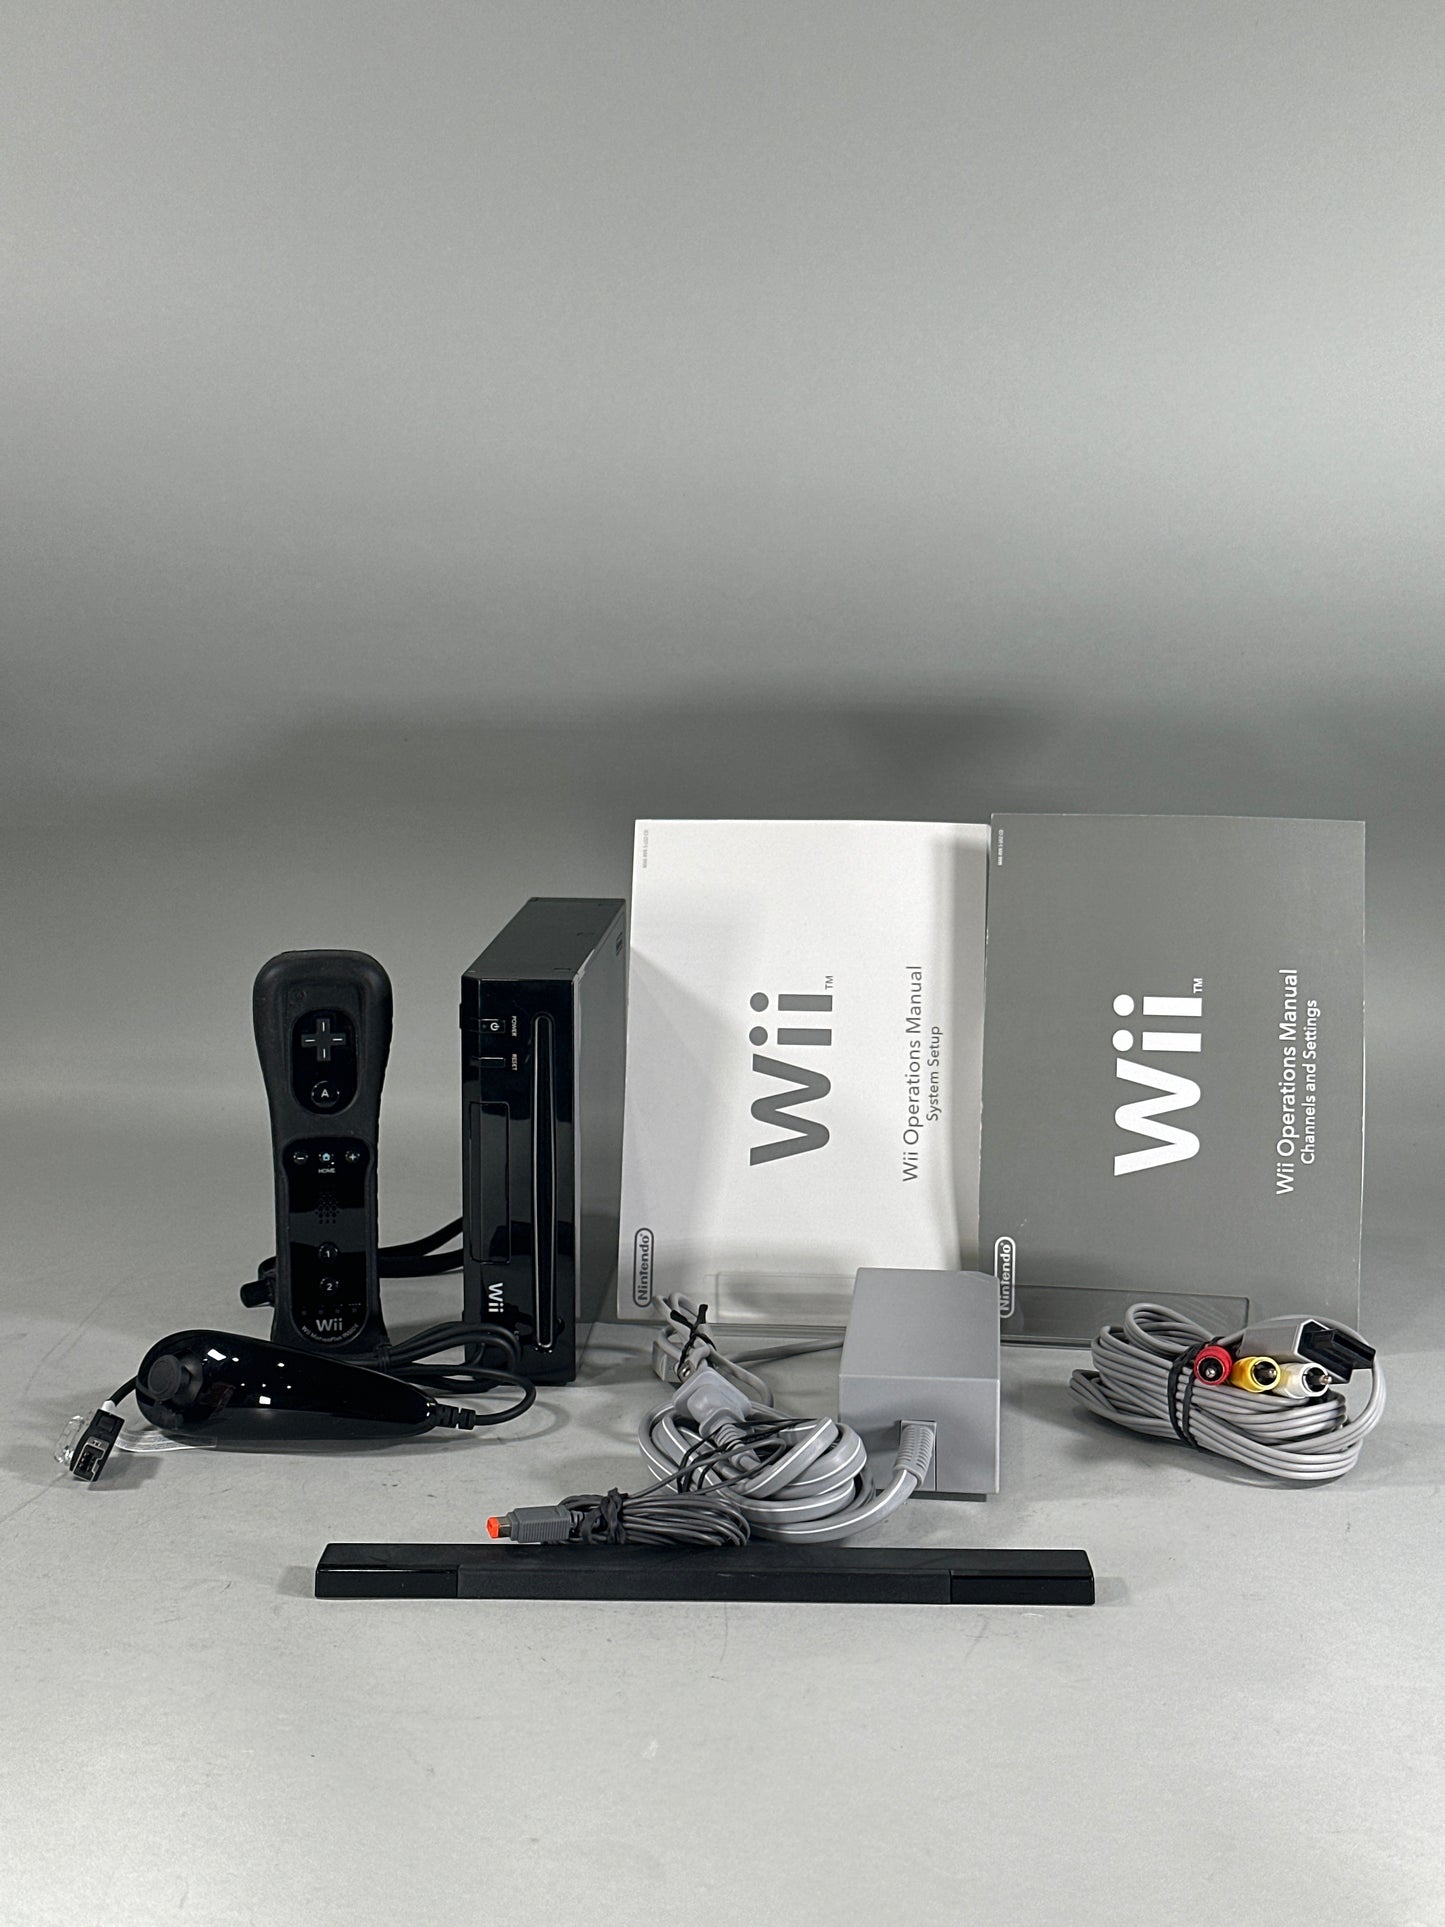 Nintendo Wii Console Gaming System Black RVL-101 (USA)